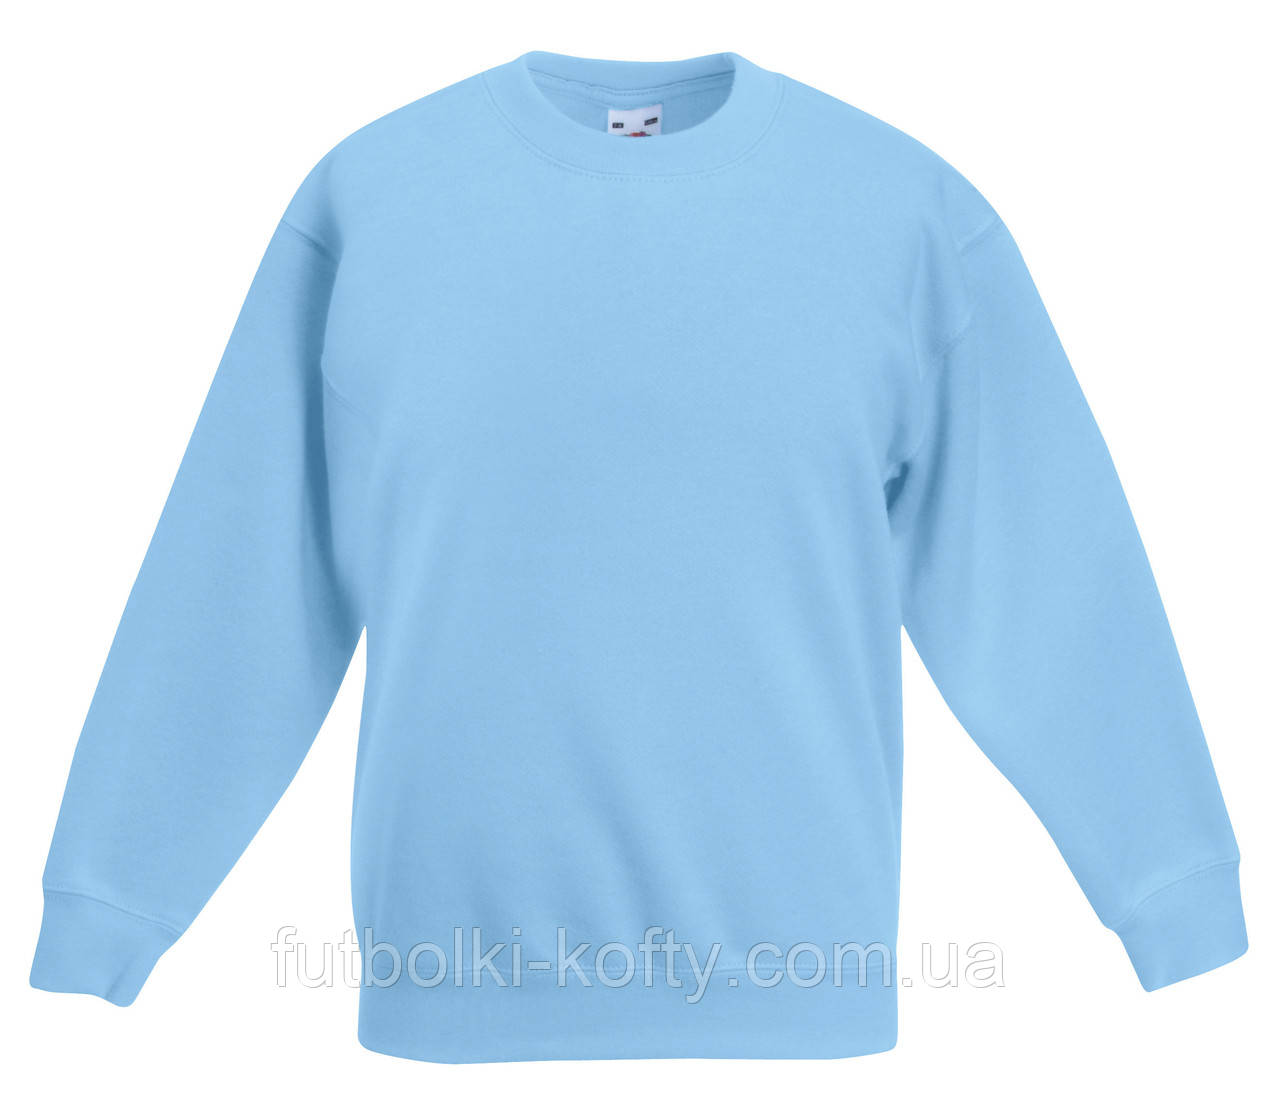 Дитячий класичний светр Небесно-блакитний Fruit Of The Loom 62-041-YT 9-11